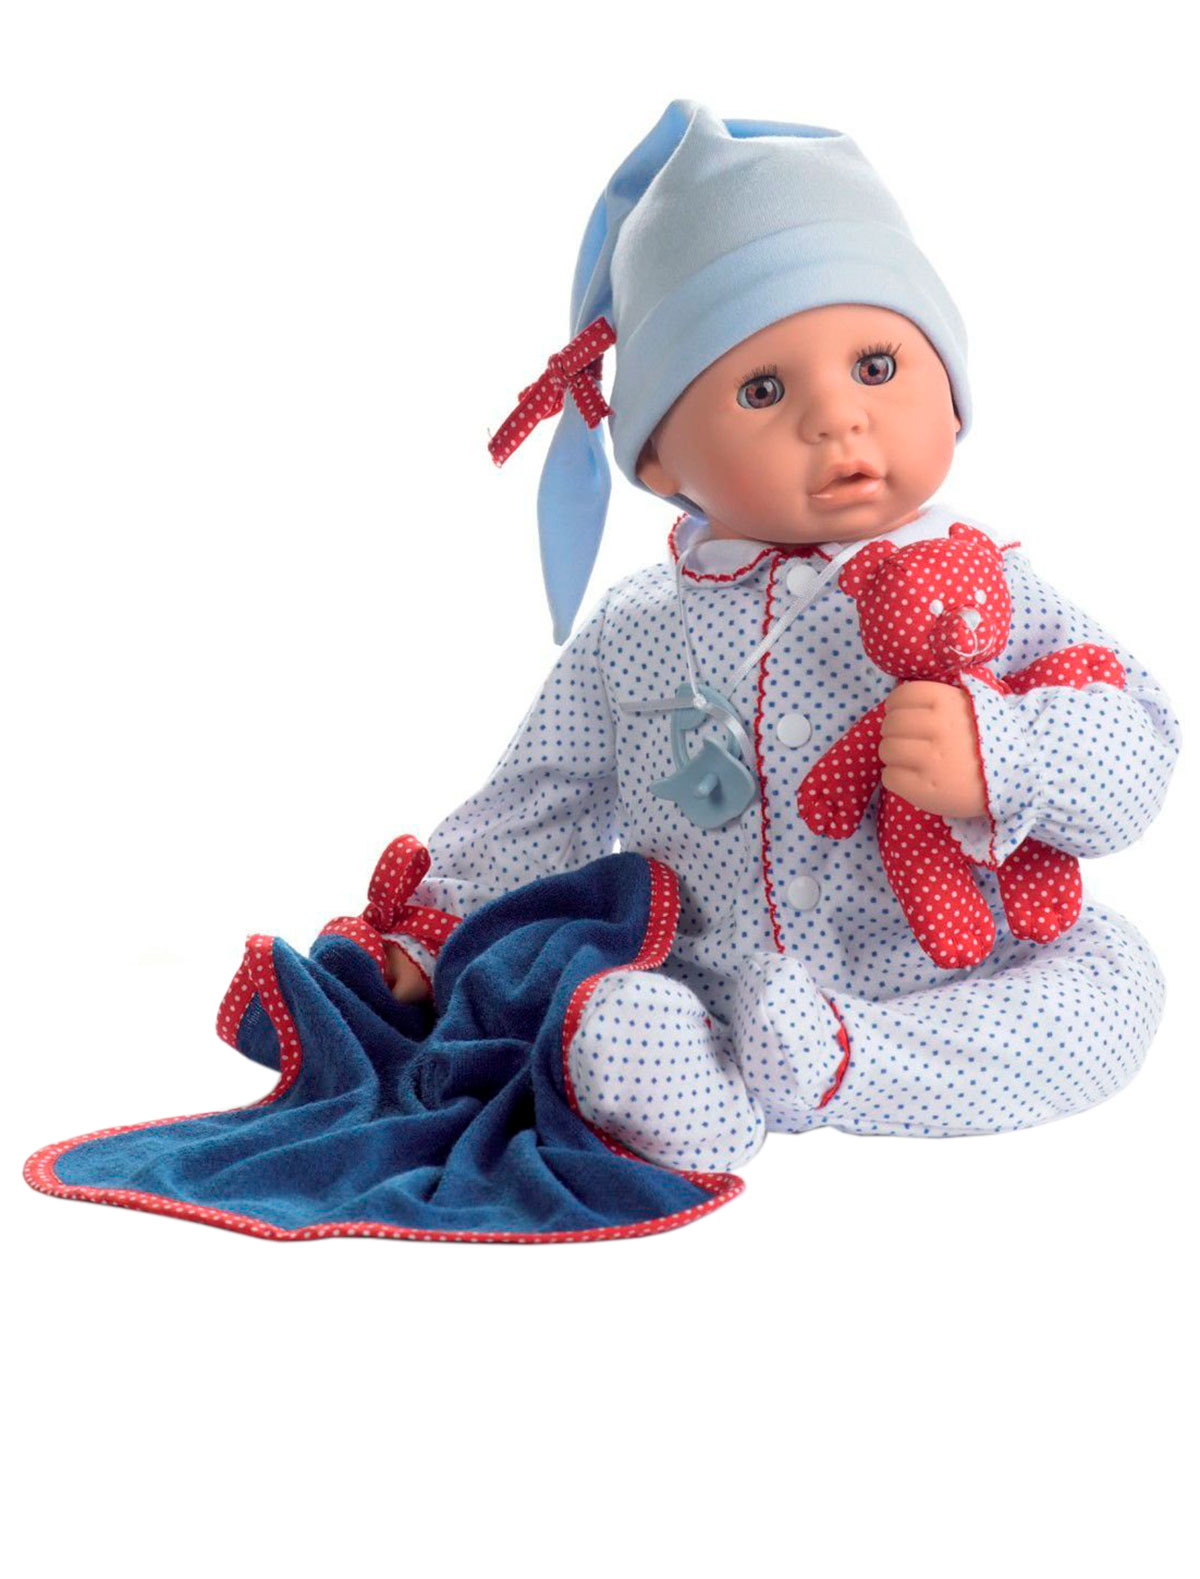 Кукла Gotz кукла спортсменка наушники полотенце 2 бут в коробке 8441